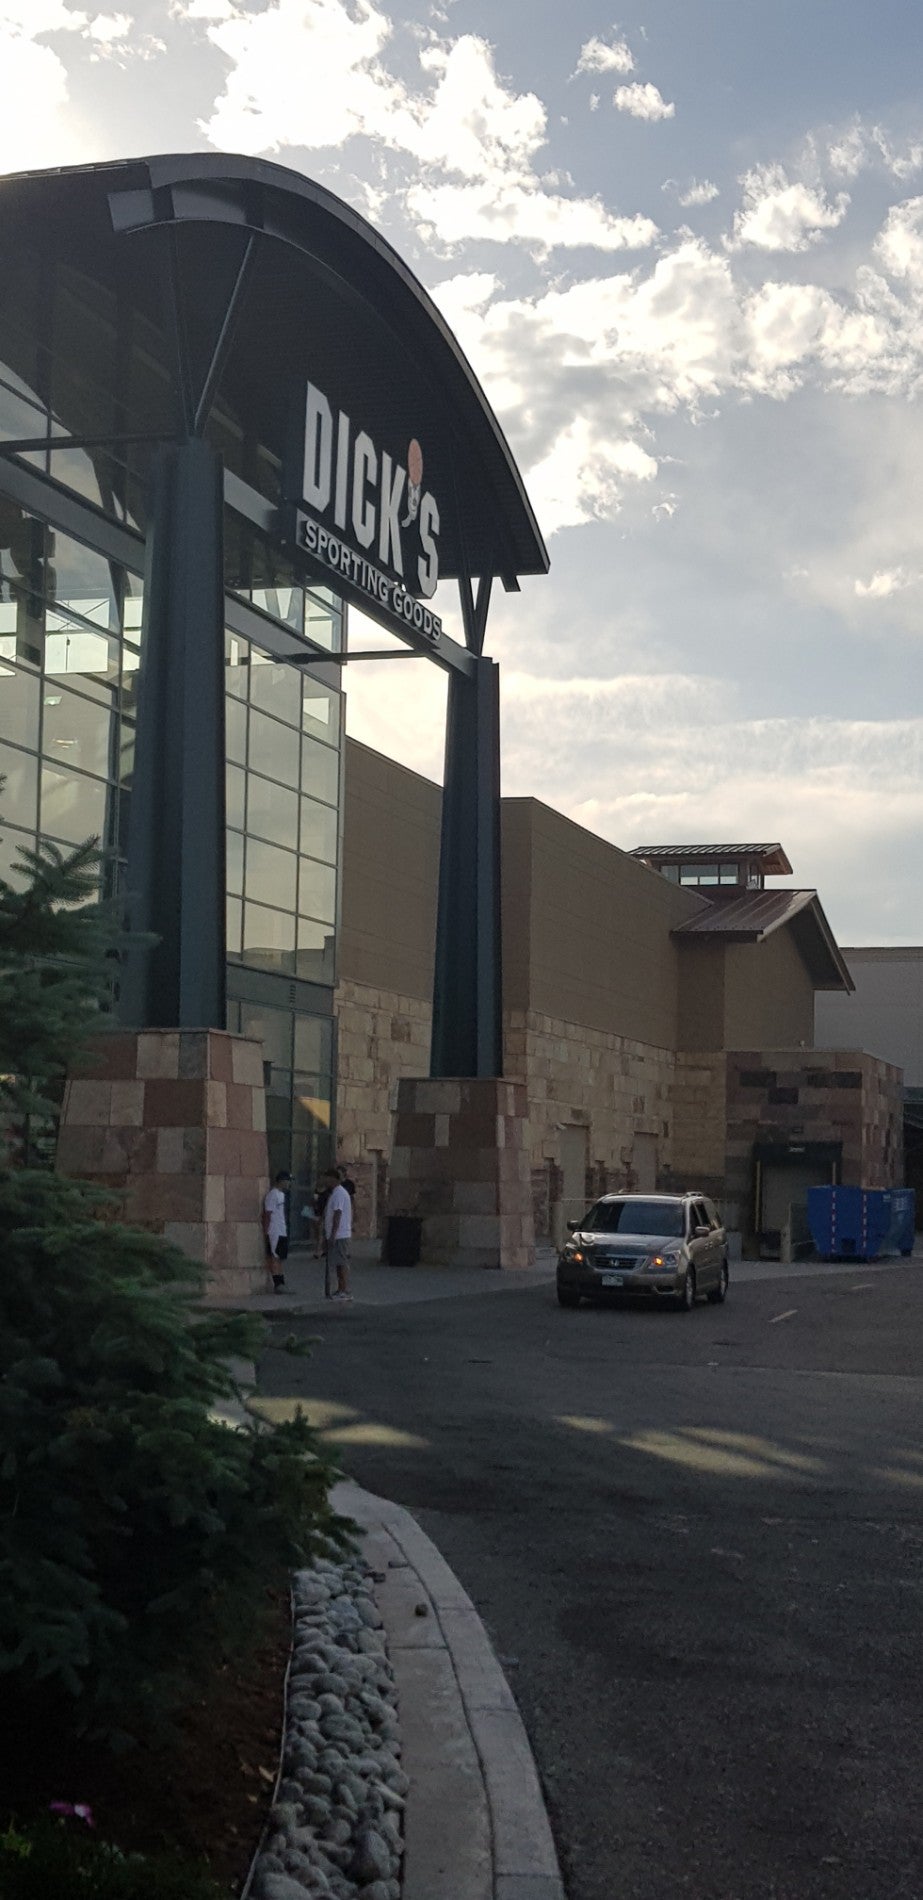 Park Meadows Mall – Colorado Traveling Ducks